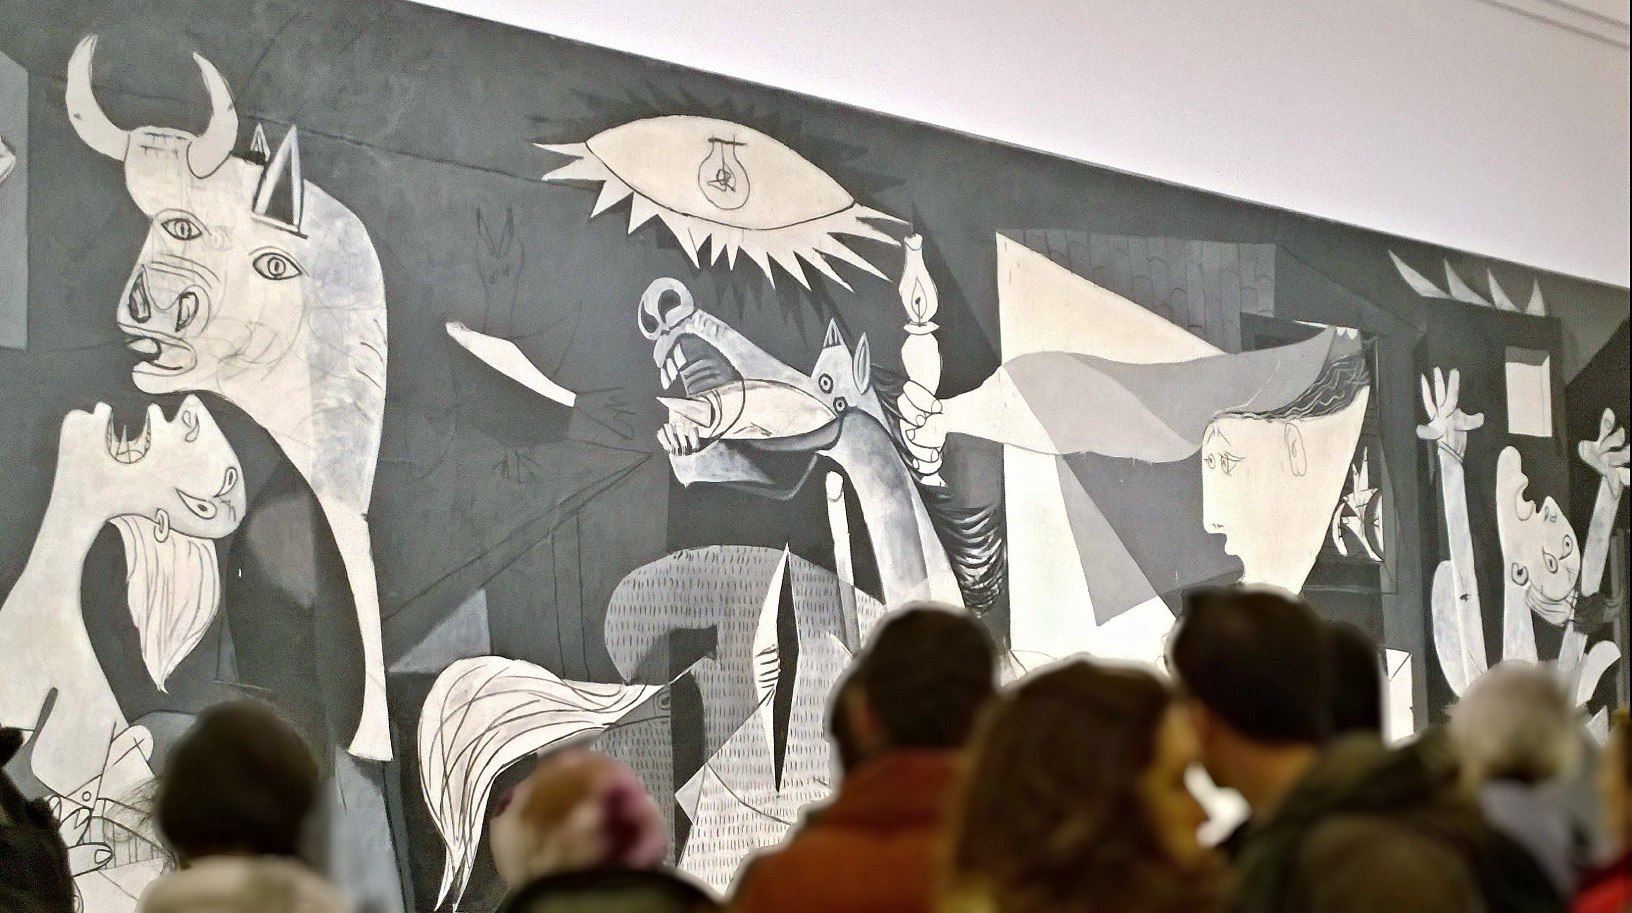 Guernica - Focal Journey (by Gustavo Espinola)